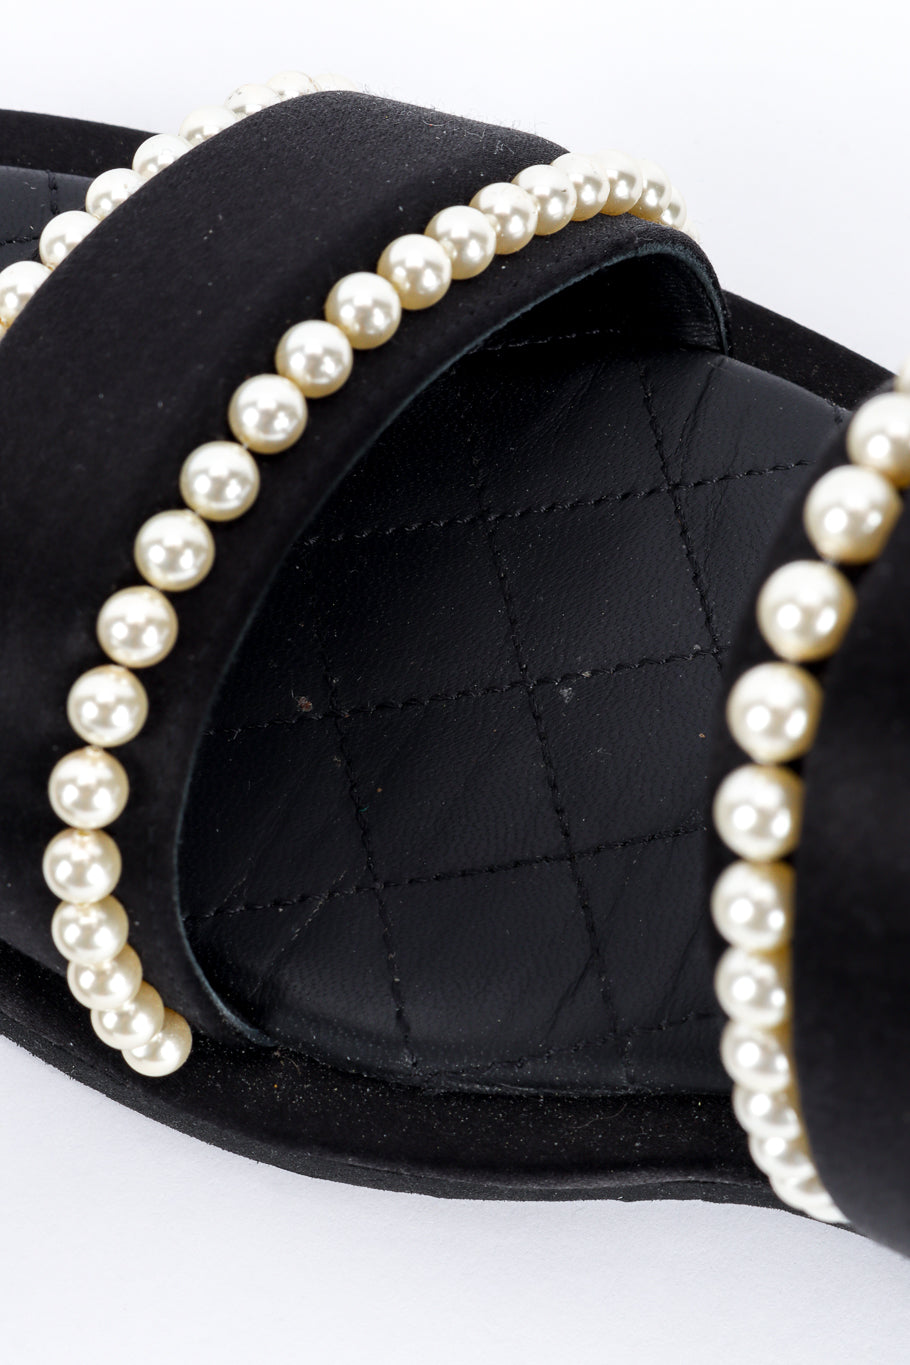 Chanel CC Satin & Pearl Sandals insole closeup @recess la